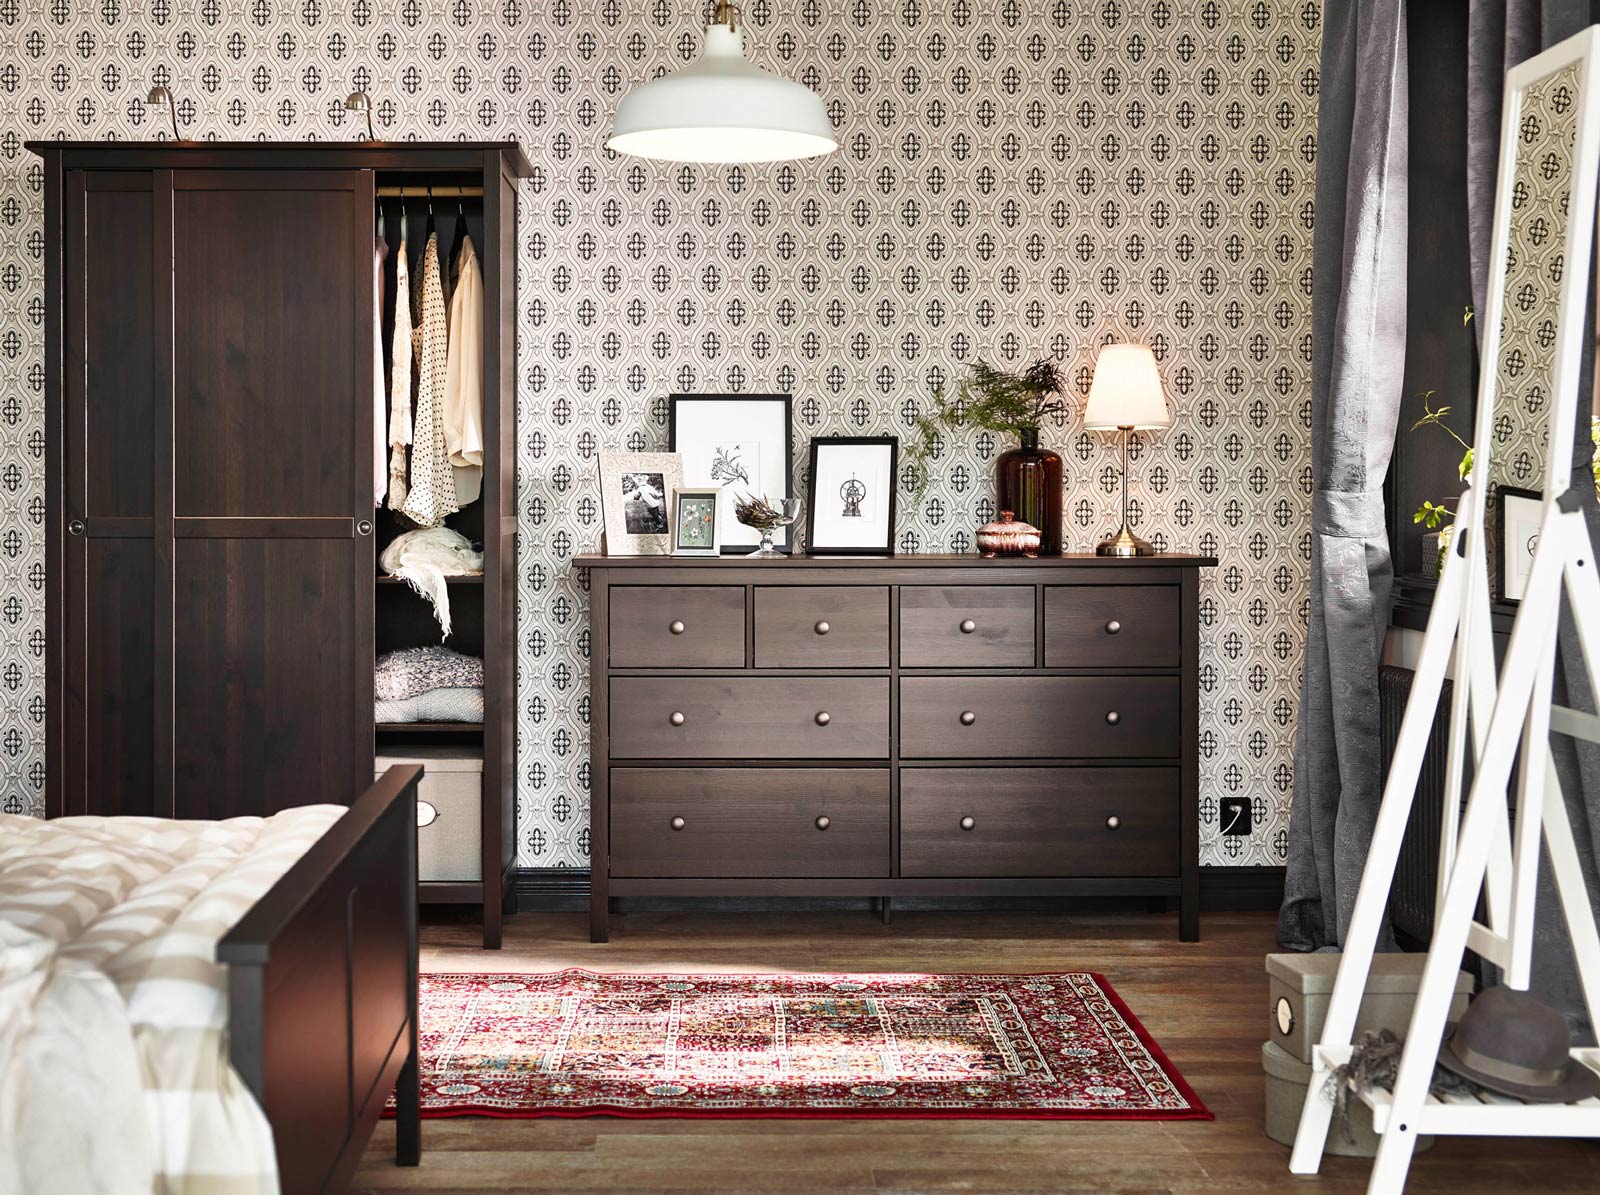 Multiple shelves in the bedroom wardrobe - Beautiful Homes